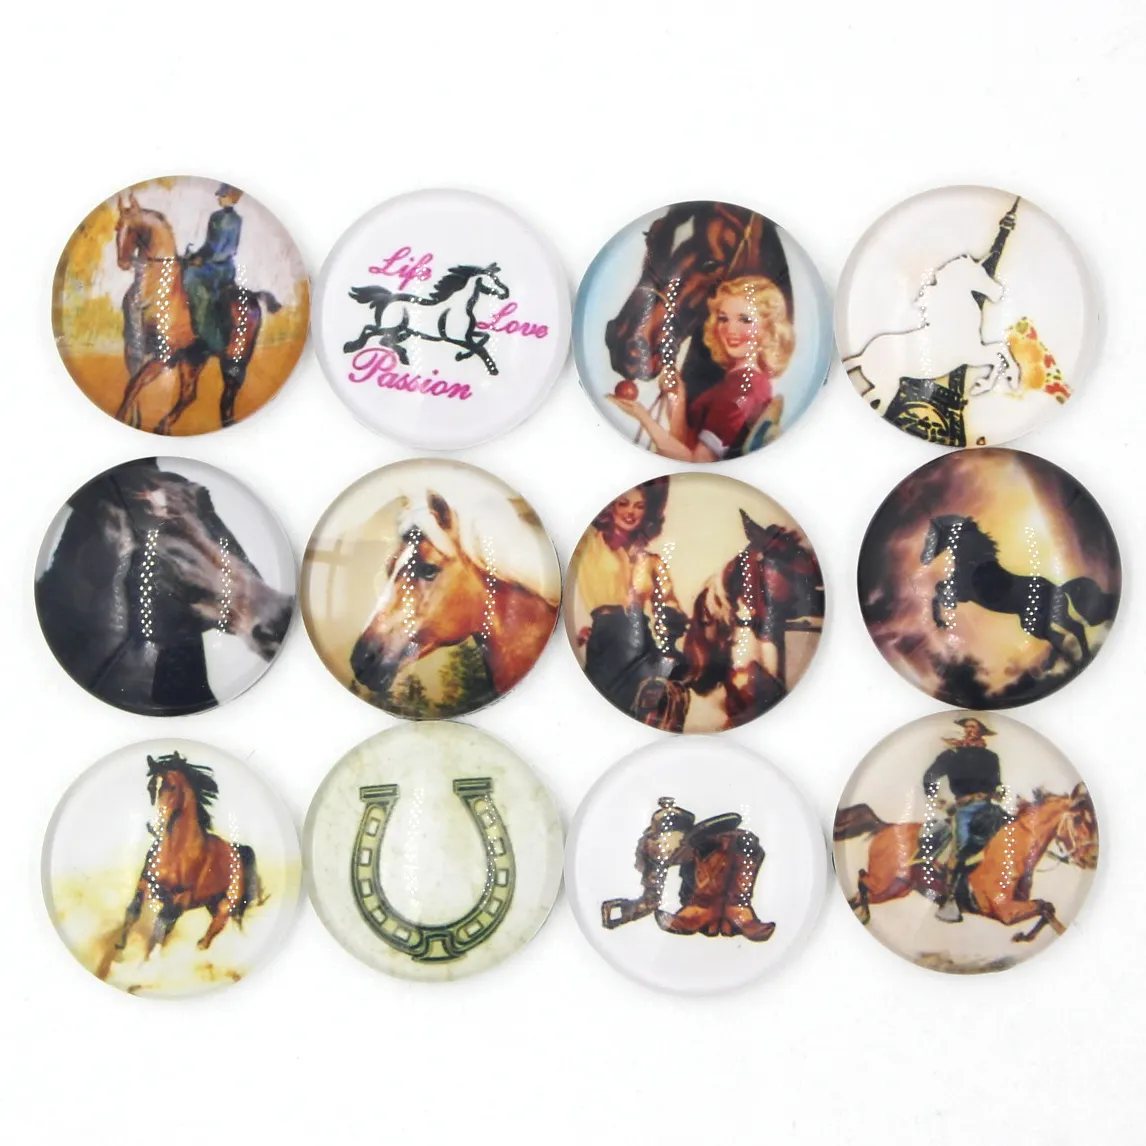 NIEUWE Collectie 18mm Cabochon Glas Steen Knop Paardensport Cowgirl Paard Hoefijzer Knoppen voor Snap Armband Ketting Ring Oorbel sieraden